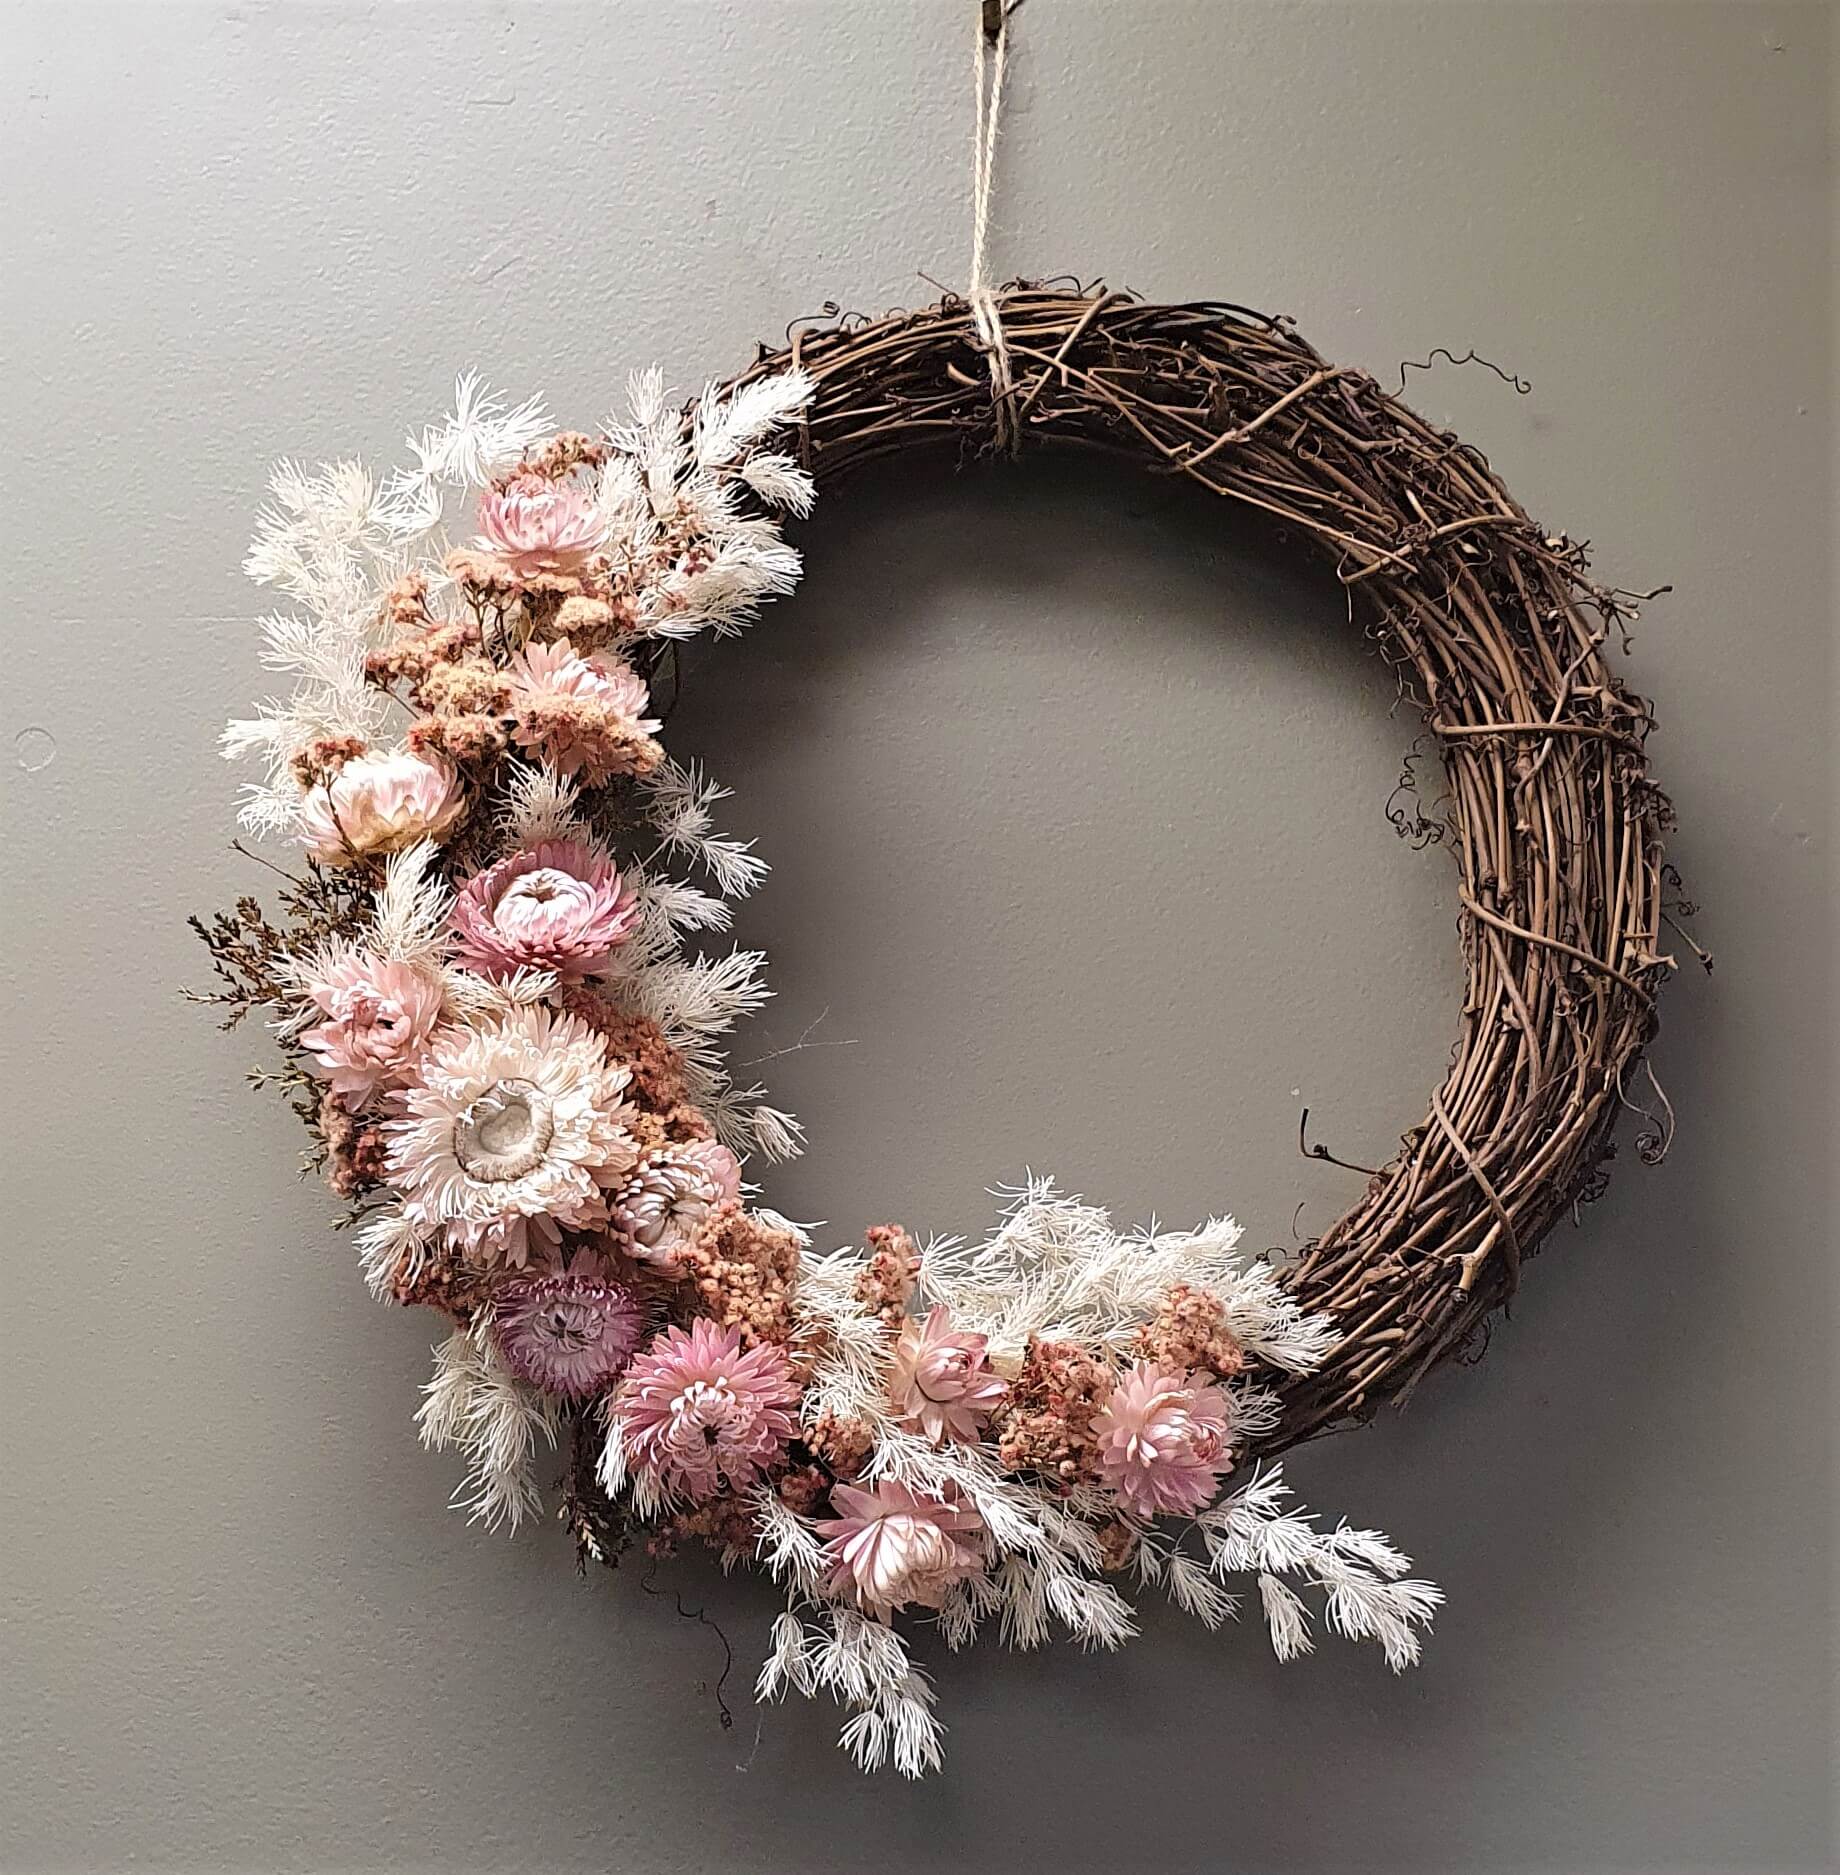  Dried flower wreath